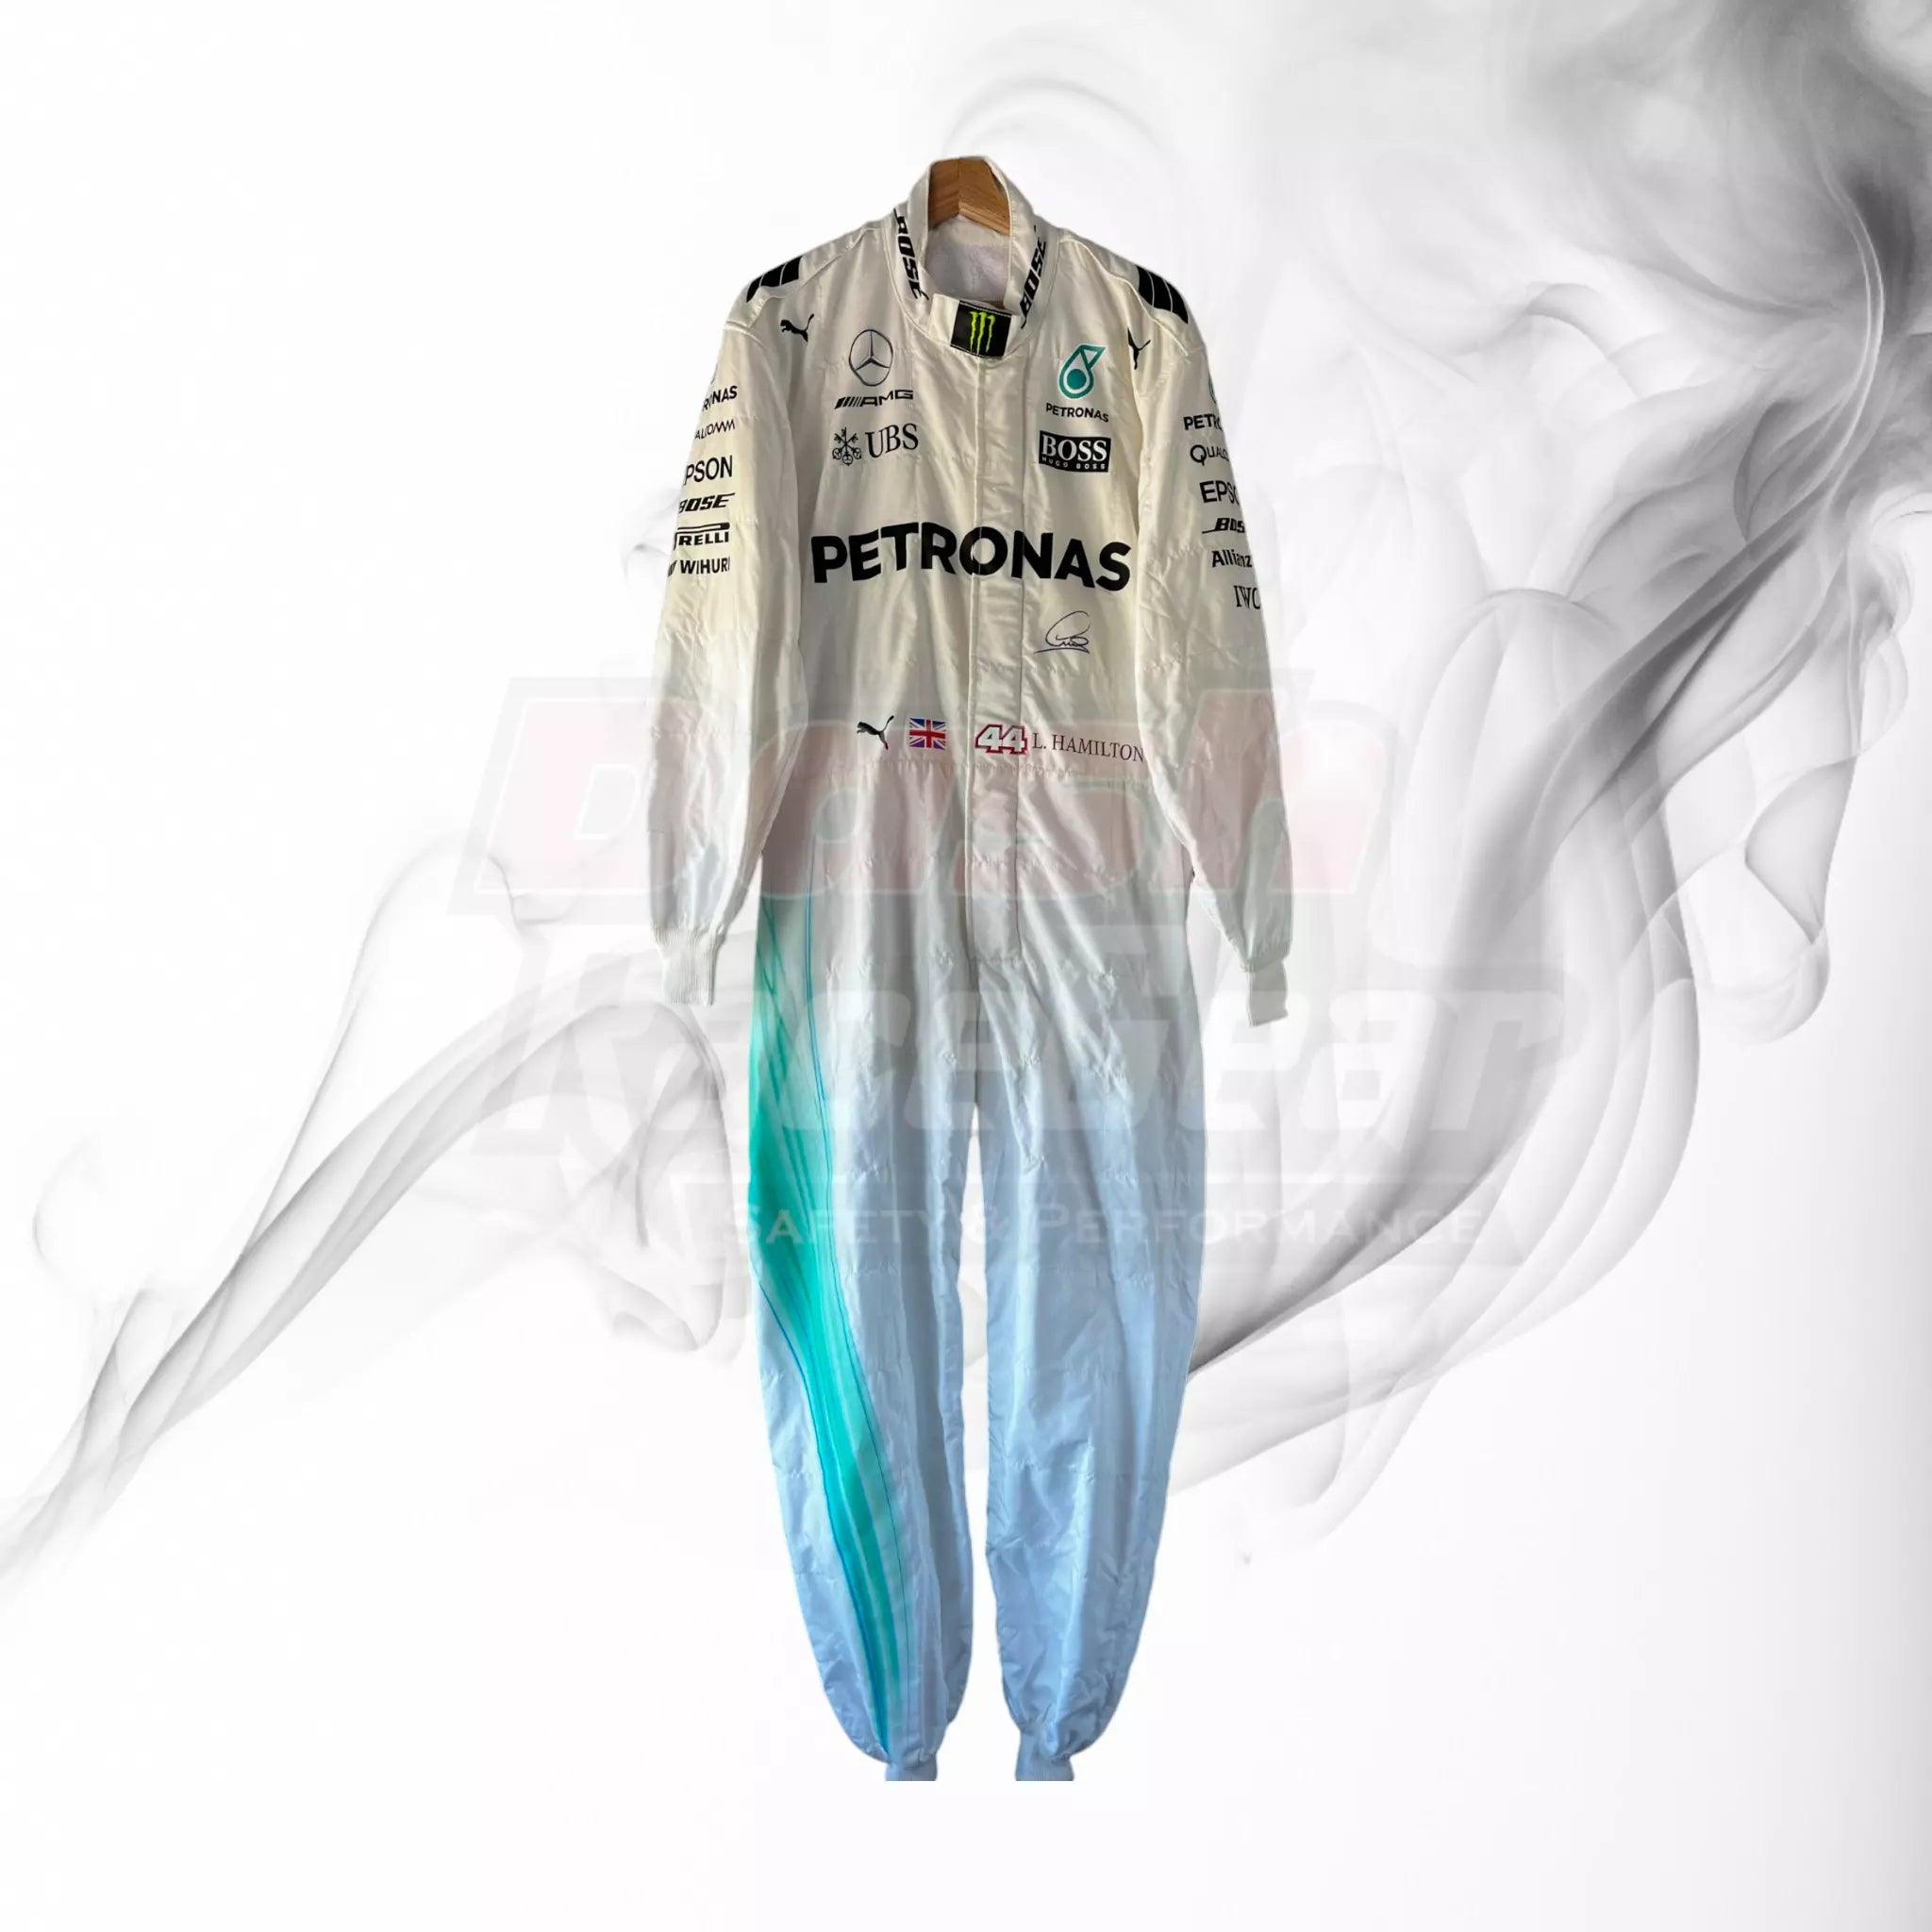 2017 Lewis Hamilton Mercedes-Benz F1 Printed Racing Suit - Dash Racegear 